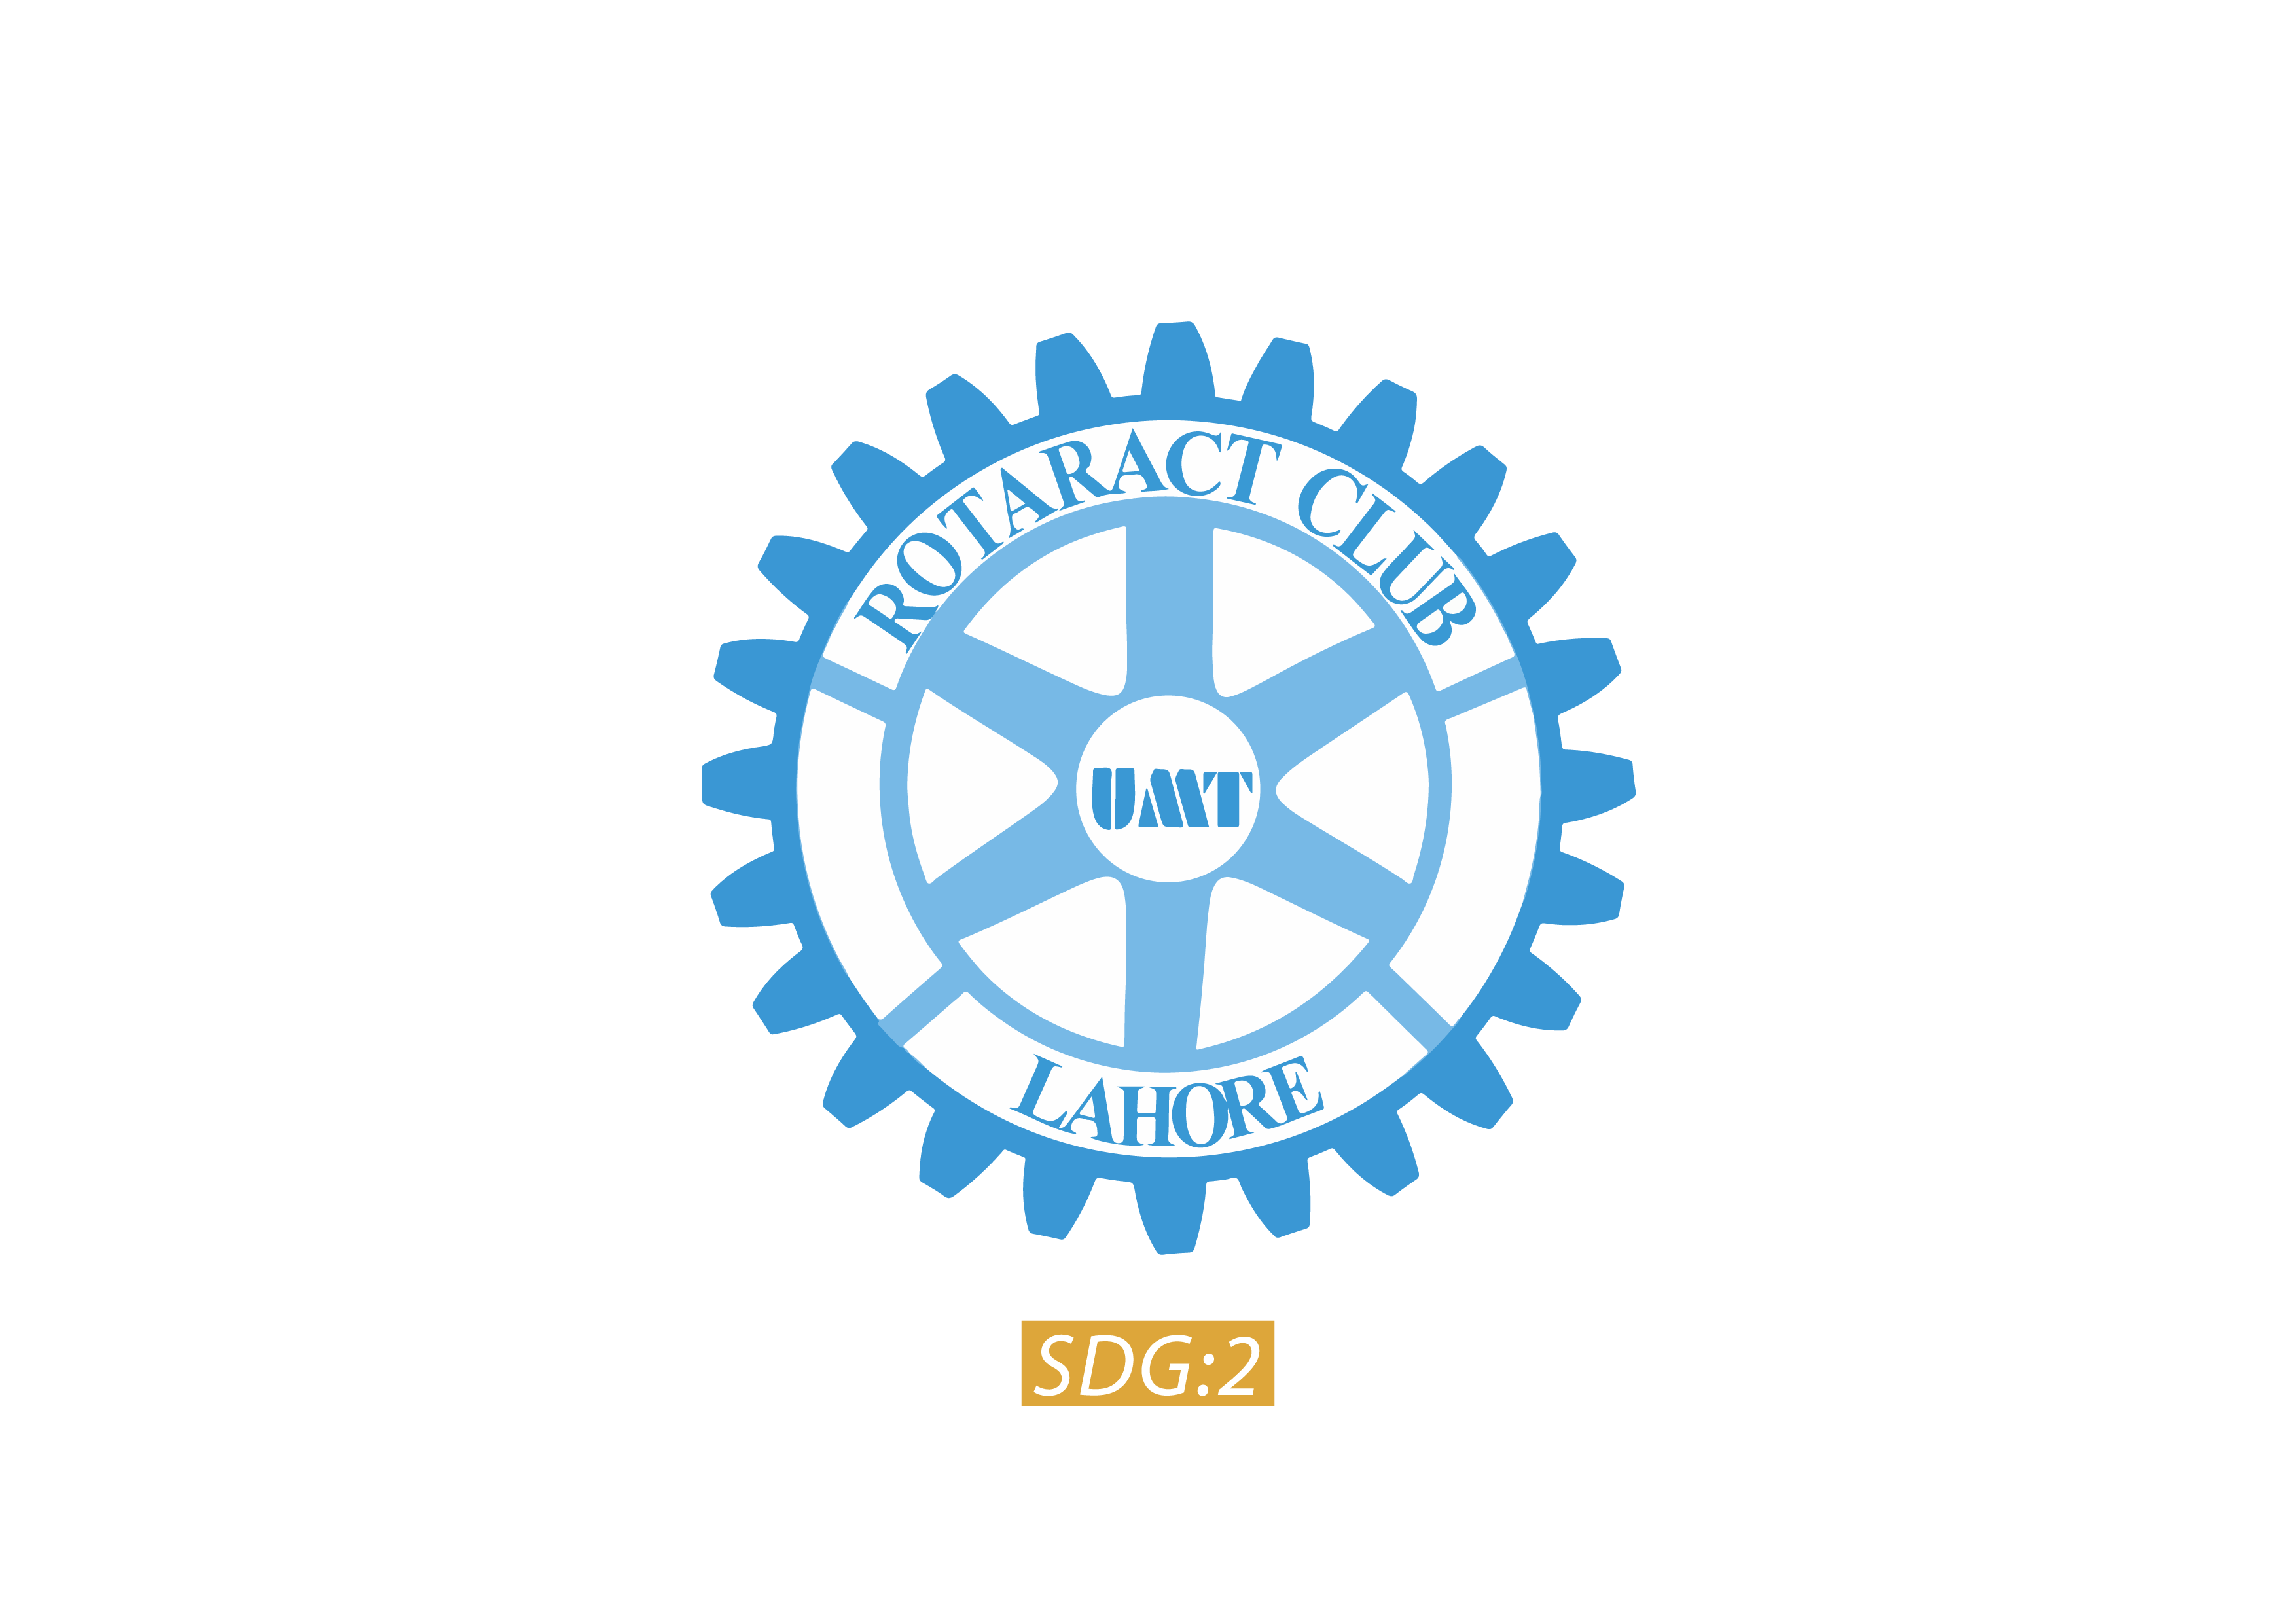 UMT Rotaract Club